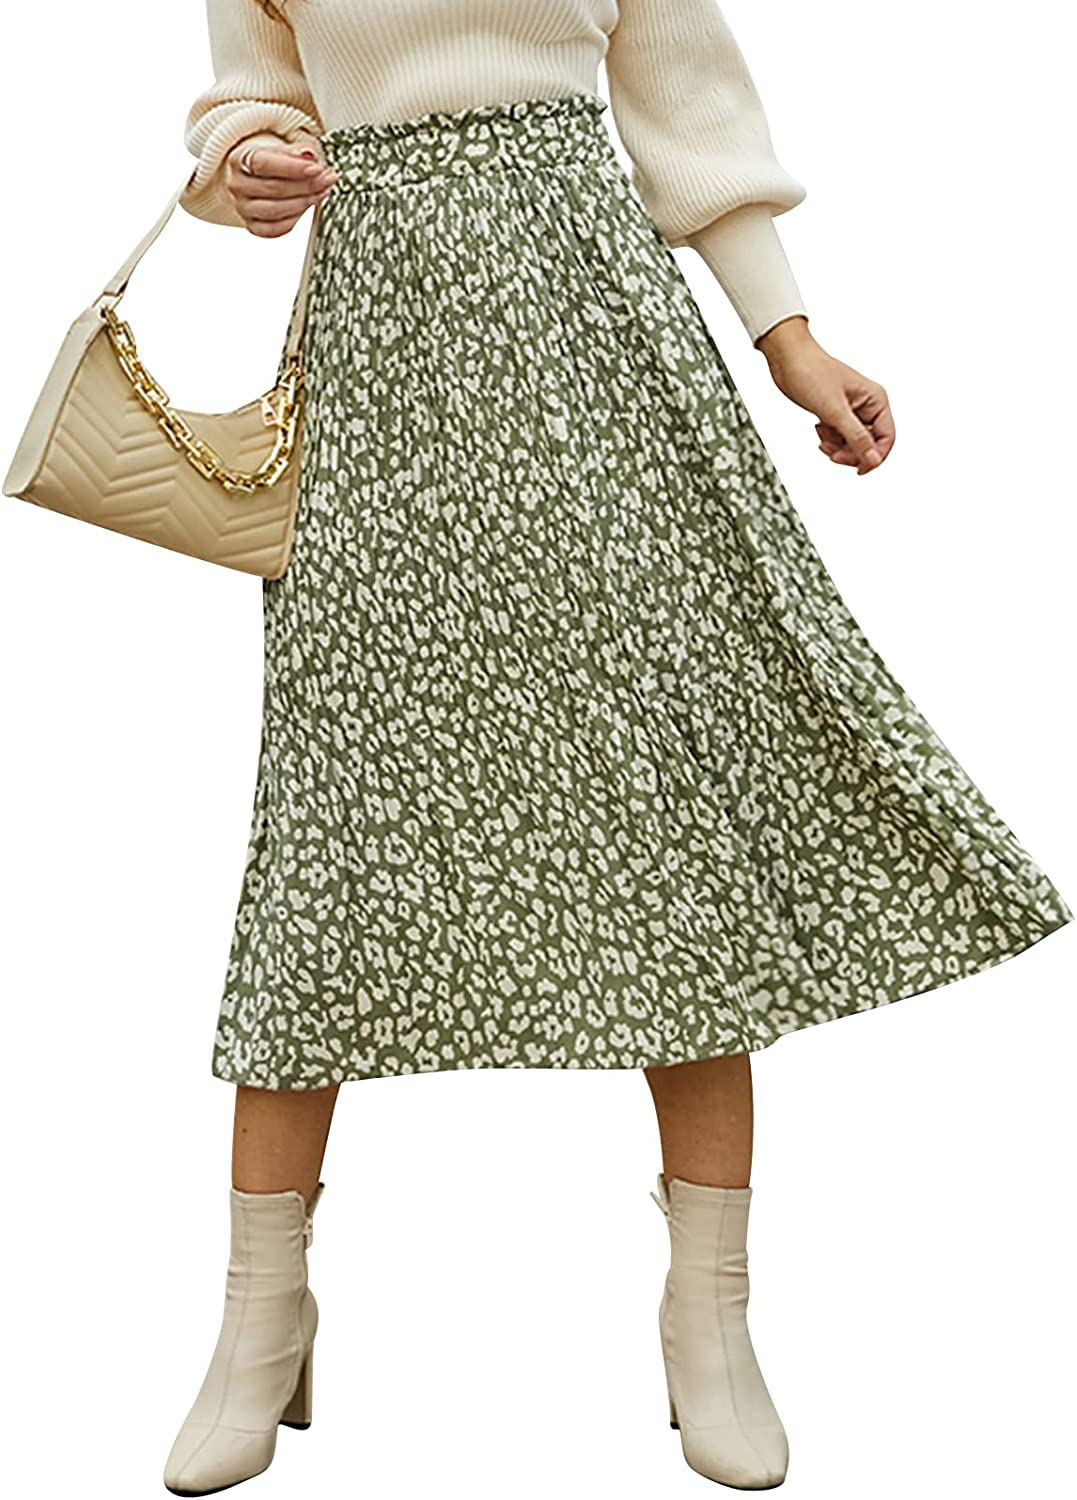 EXLURA Womens High Waist Polka Dot Pleated Skirt Midi Swing Skirt 